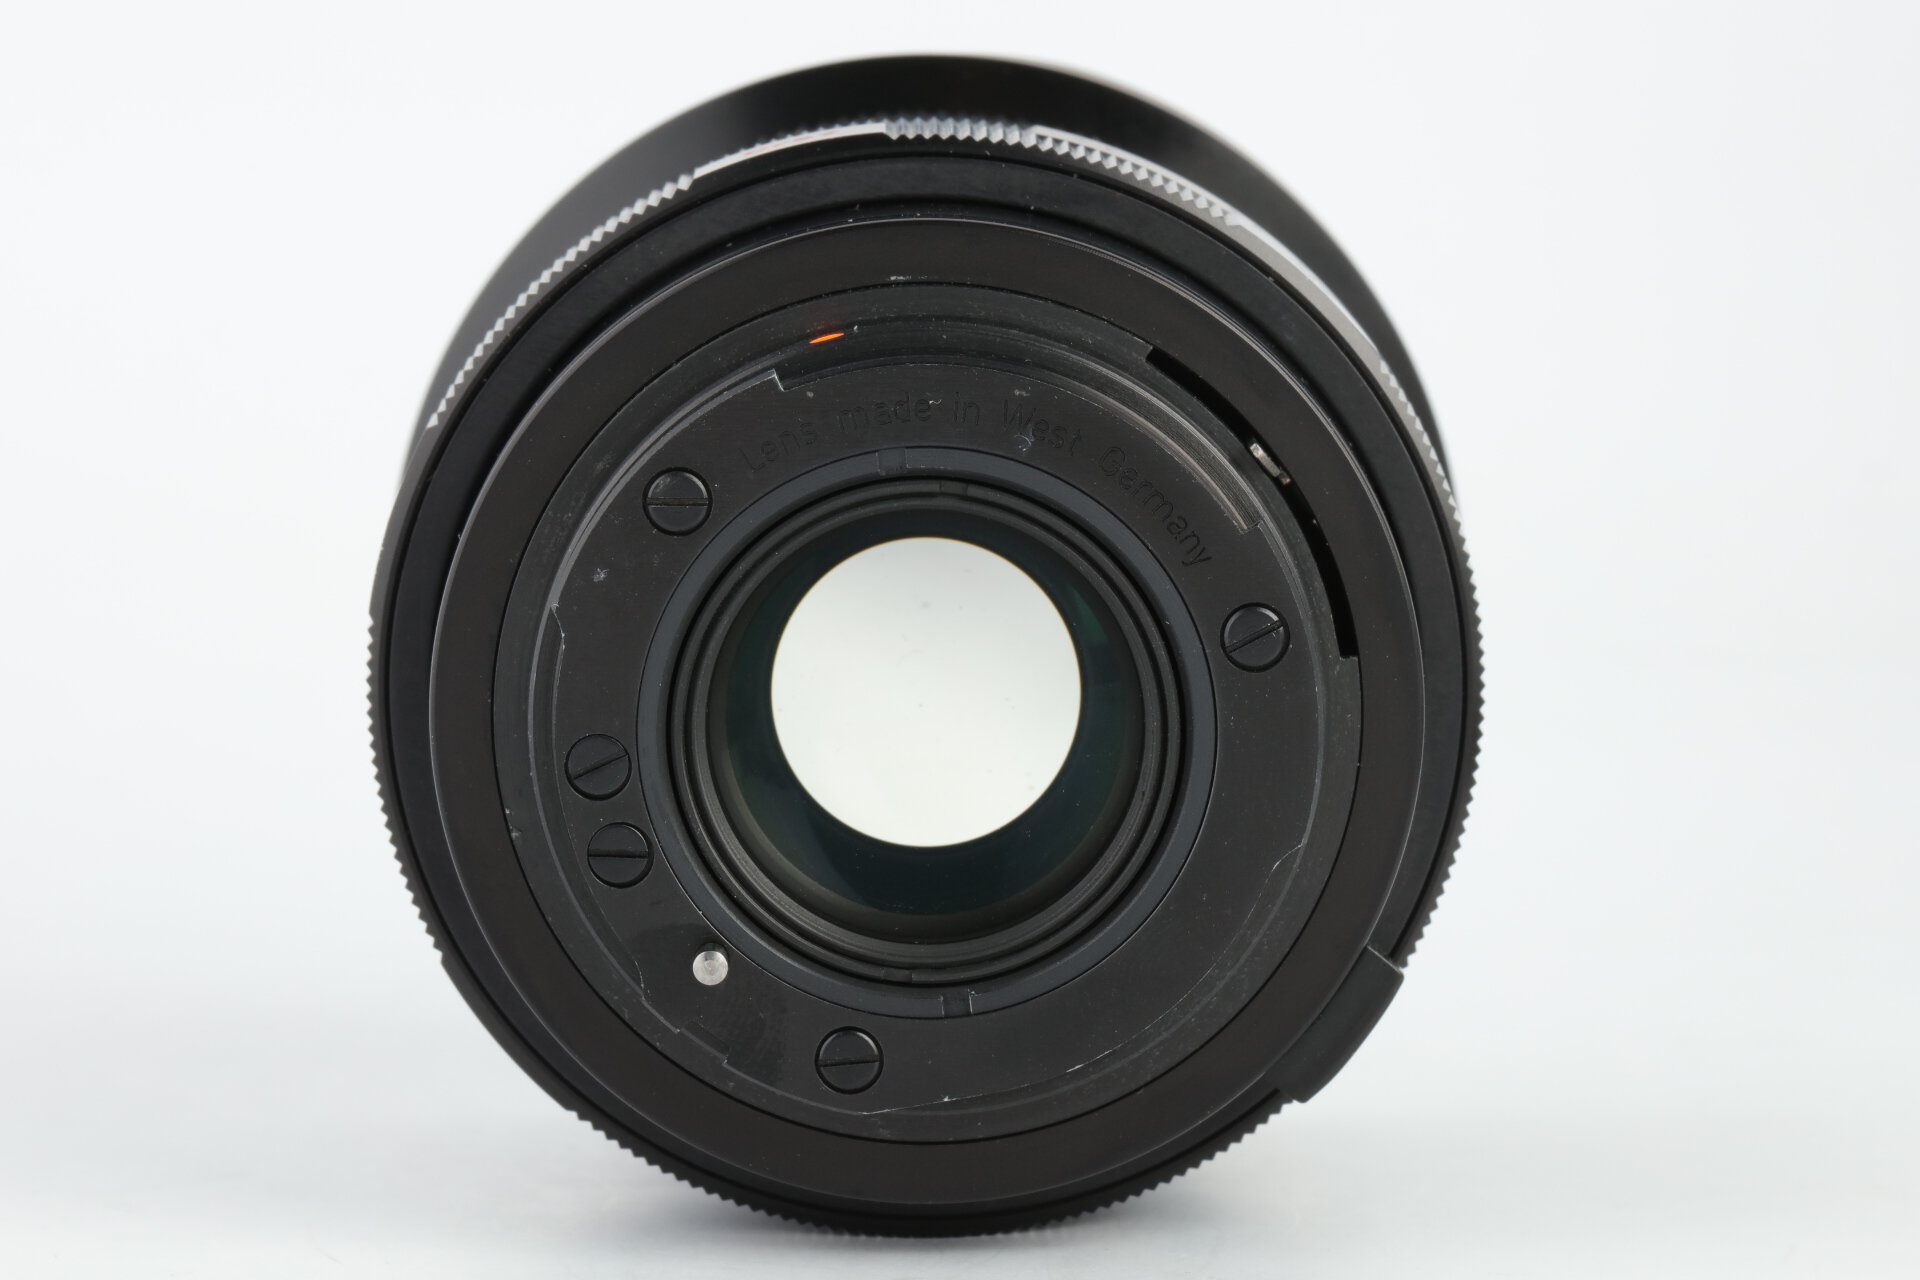 Carl Zeiss F-Distagon 2,8/16mm HFT f.Rollei